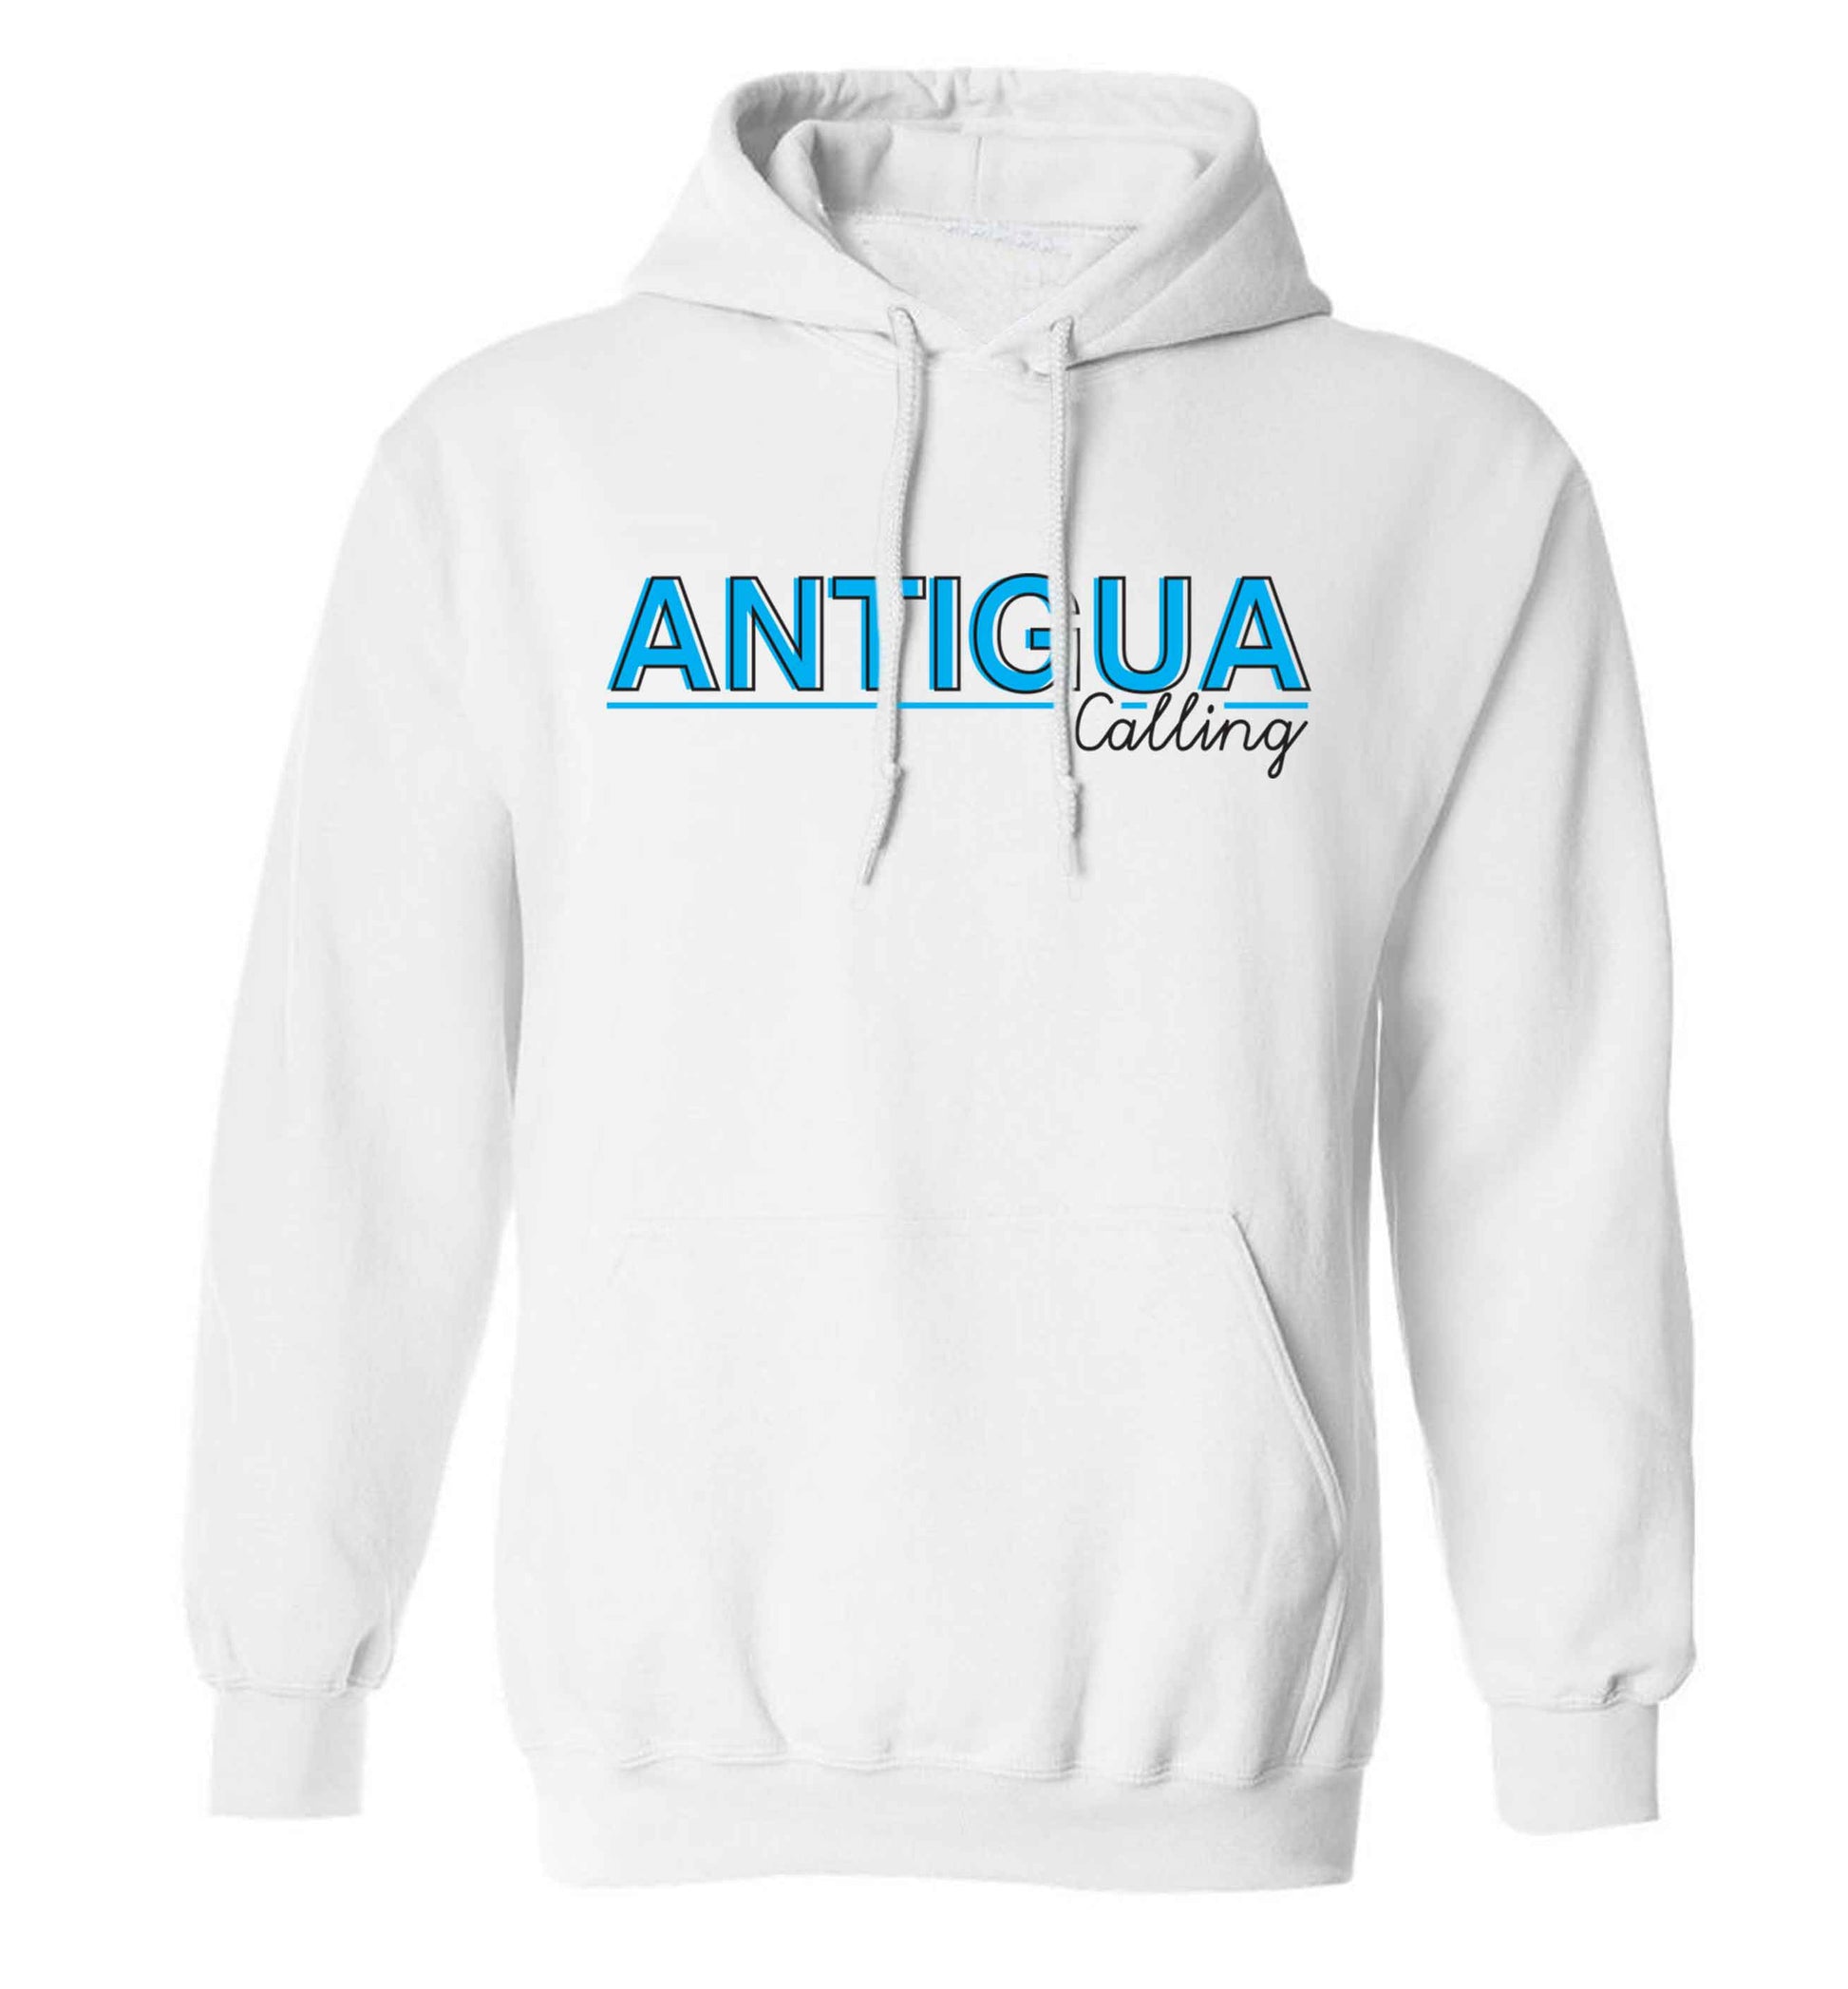 Antigua calling adults unisex white hoodie 2XL